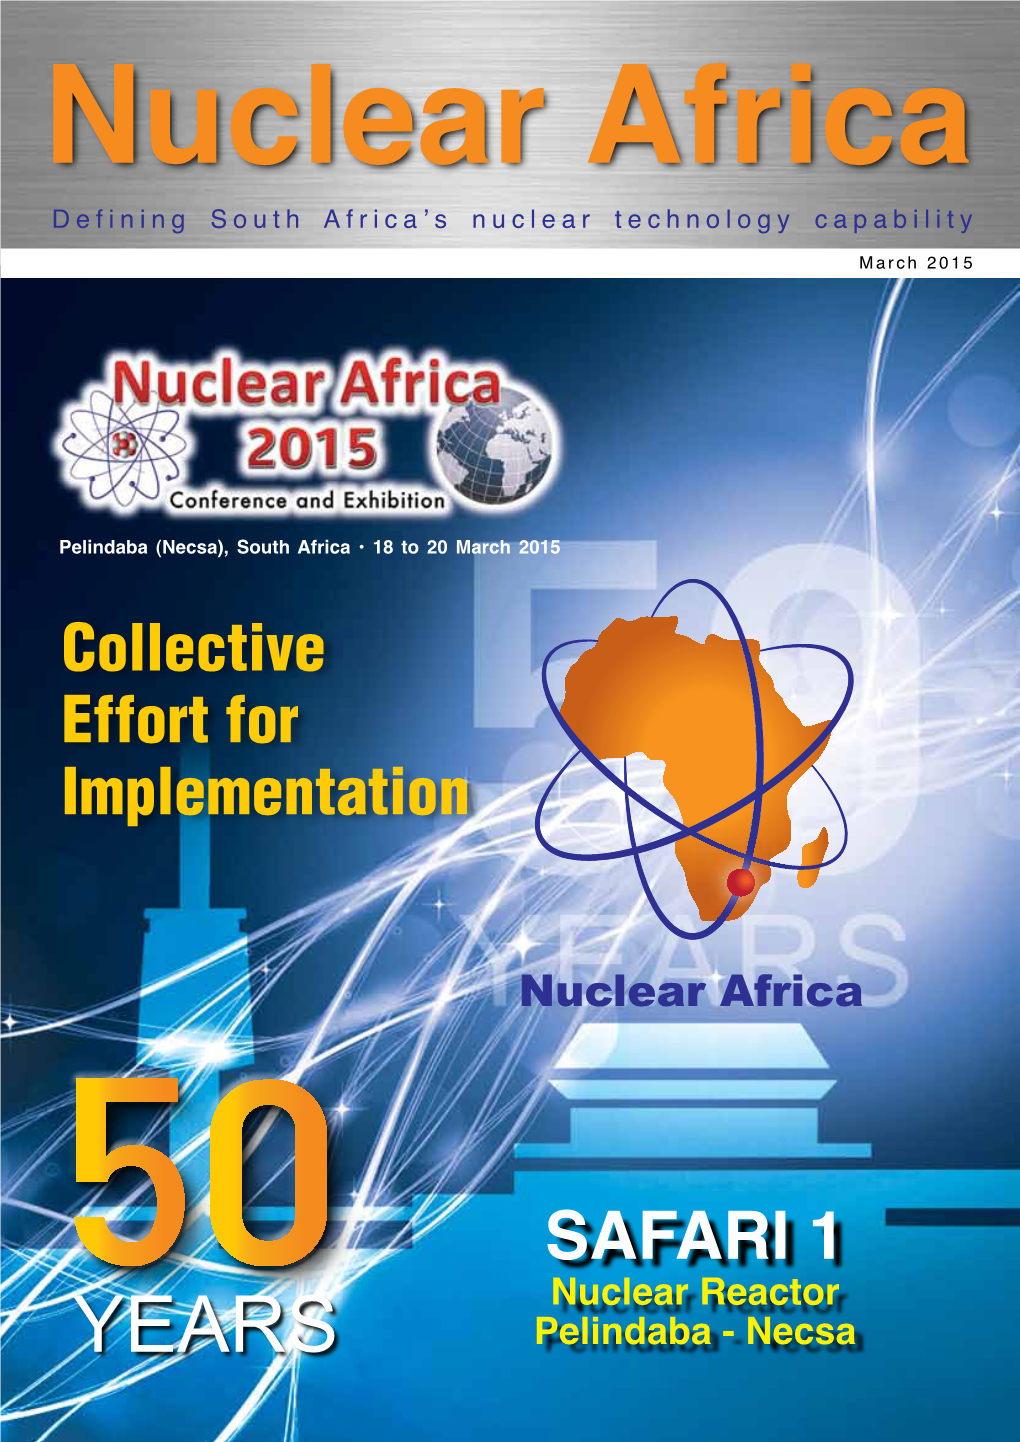 SAFARI 1 Nuclear Reactor YEARS Pelindaba - Necsa Endorsed By